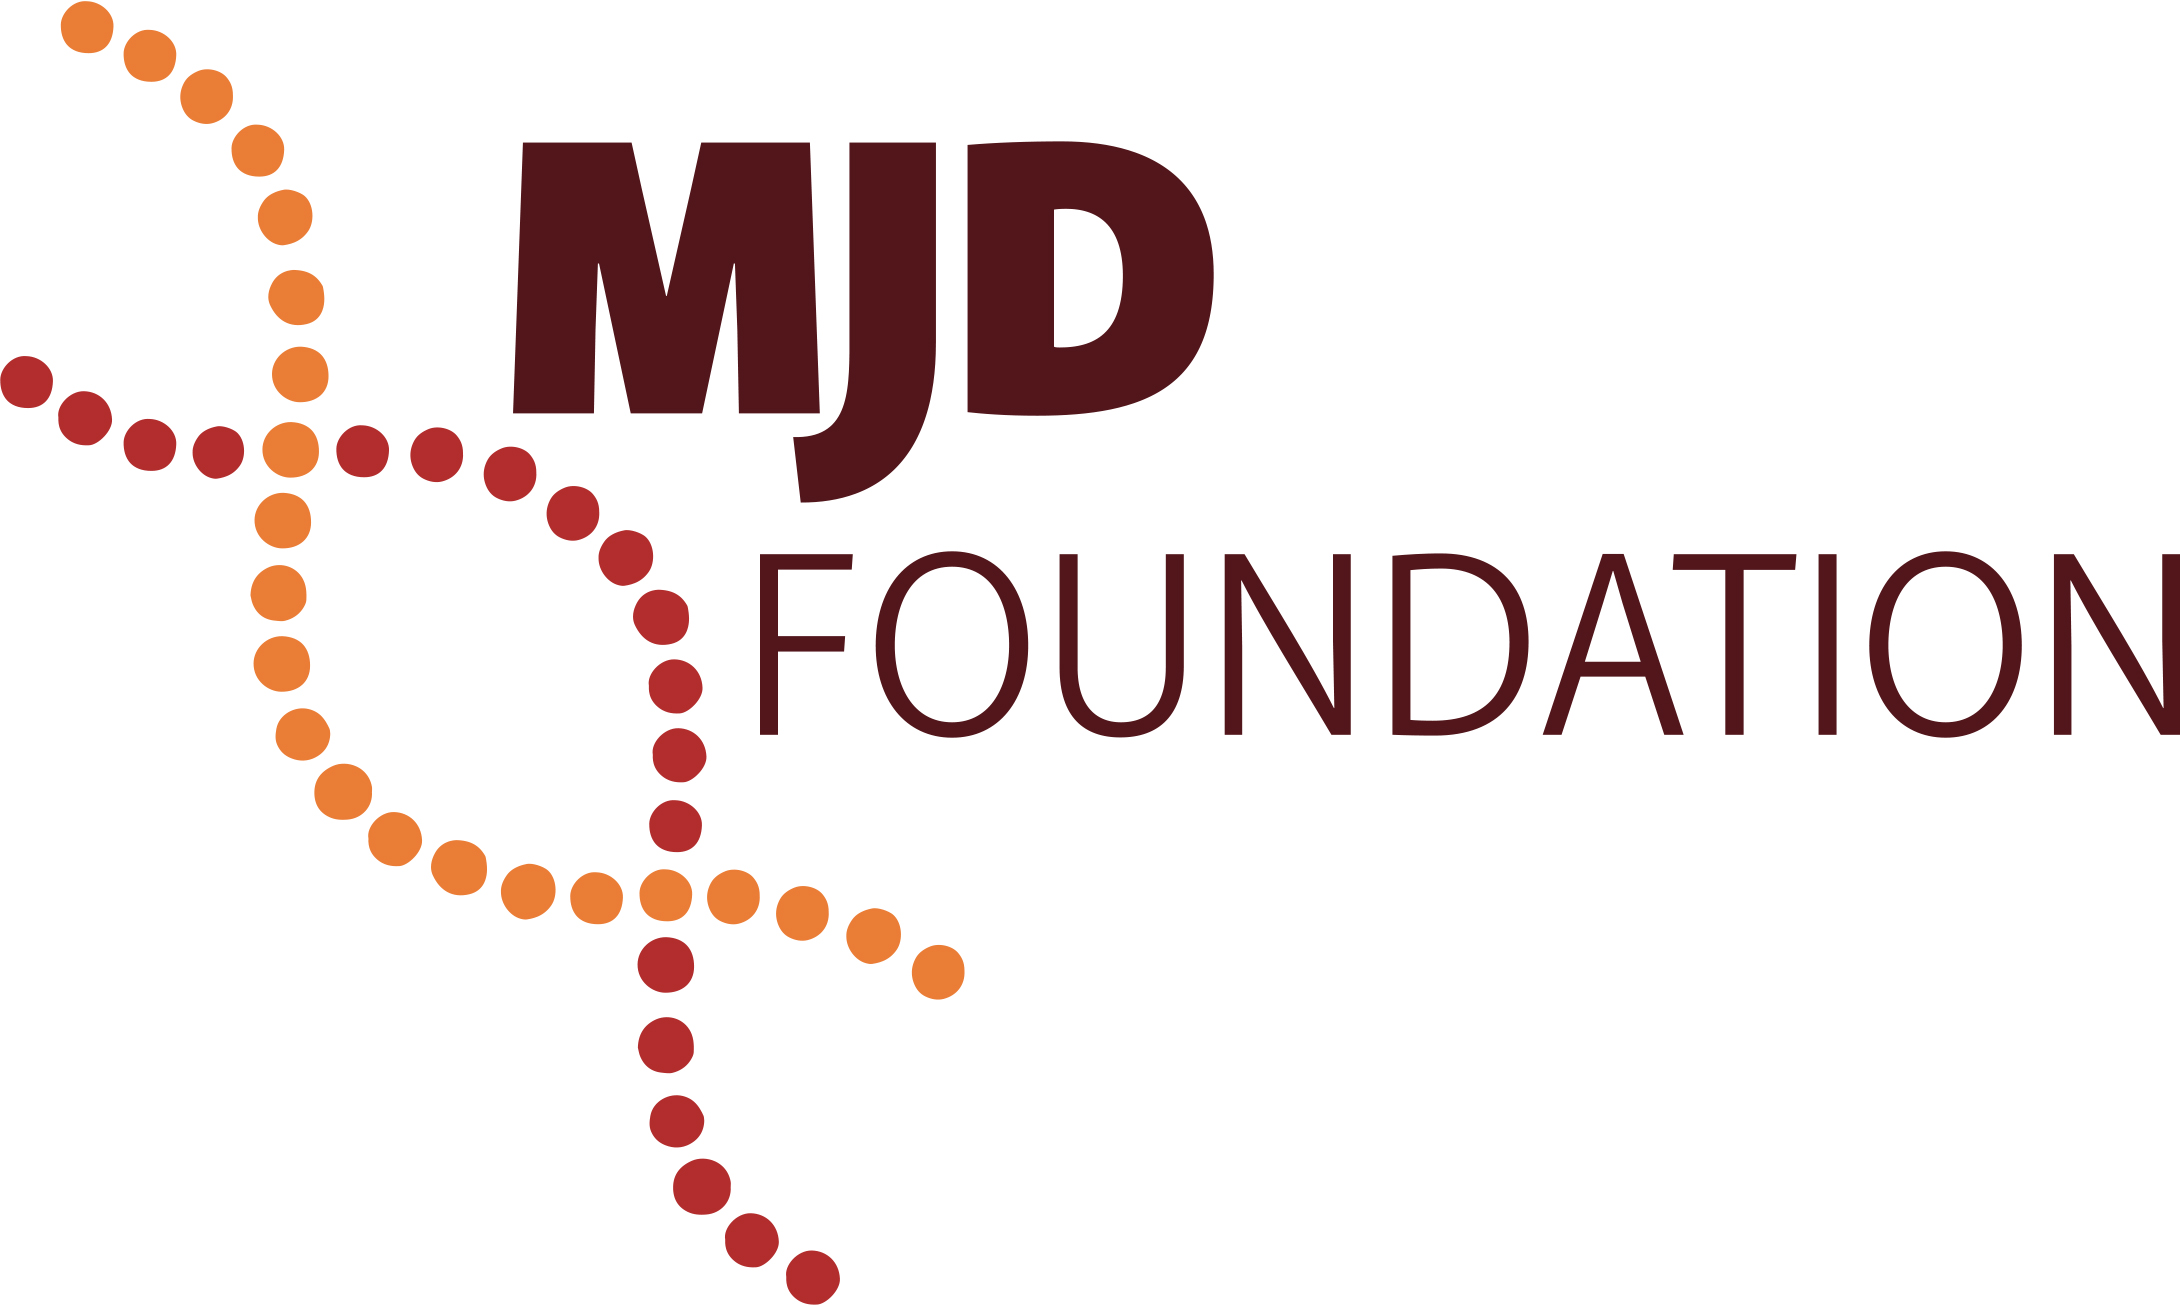 MJD foundation - NDS member